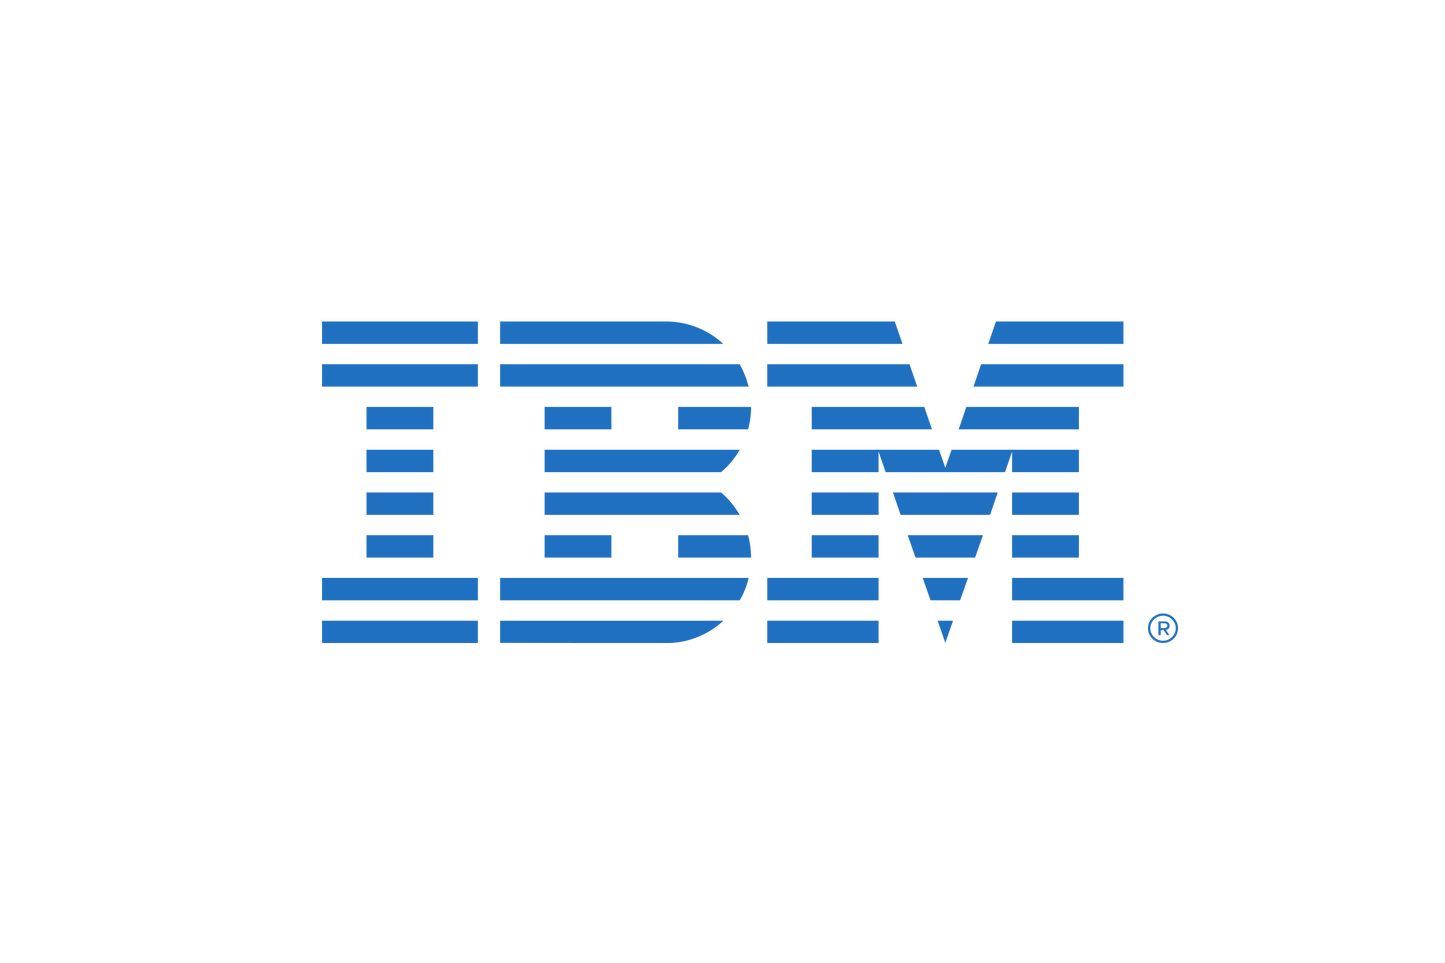 BigID Data Quality for IBM Cloud Pak for Data Application per Annum